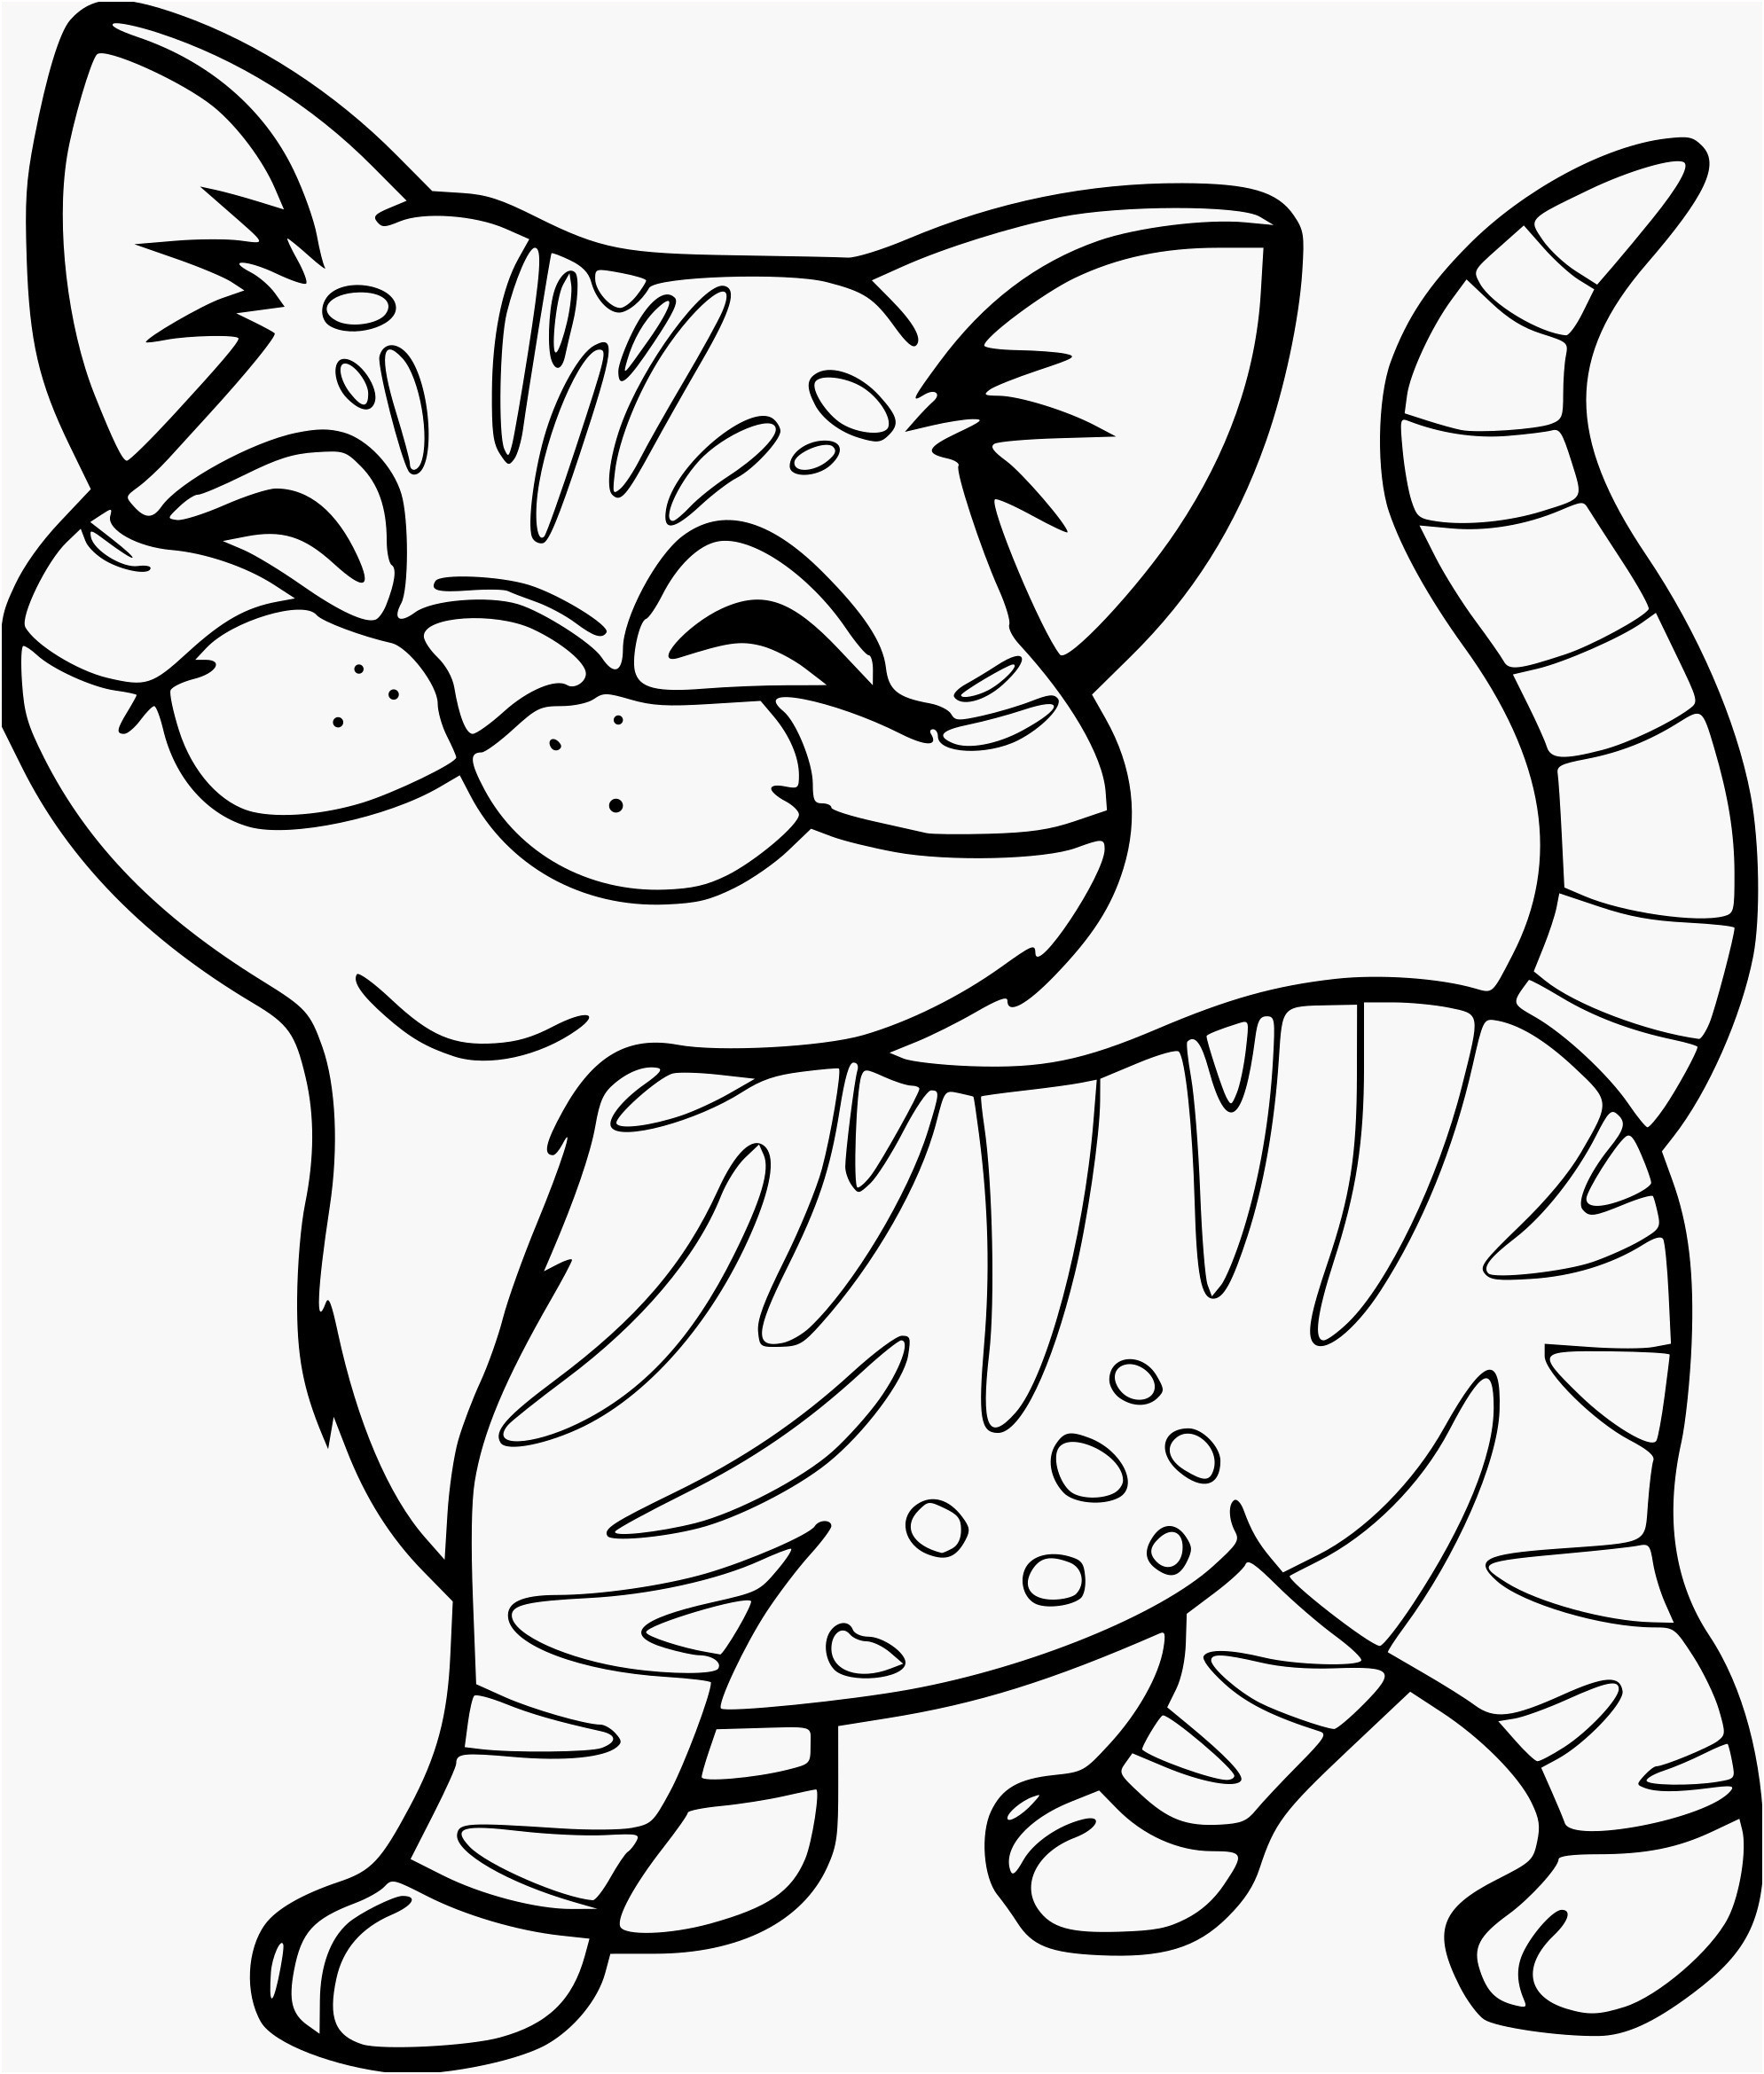 dessin a imprimer de chat mignon